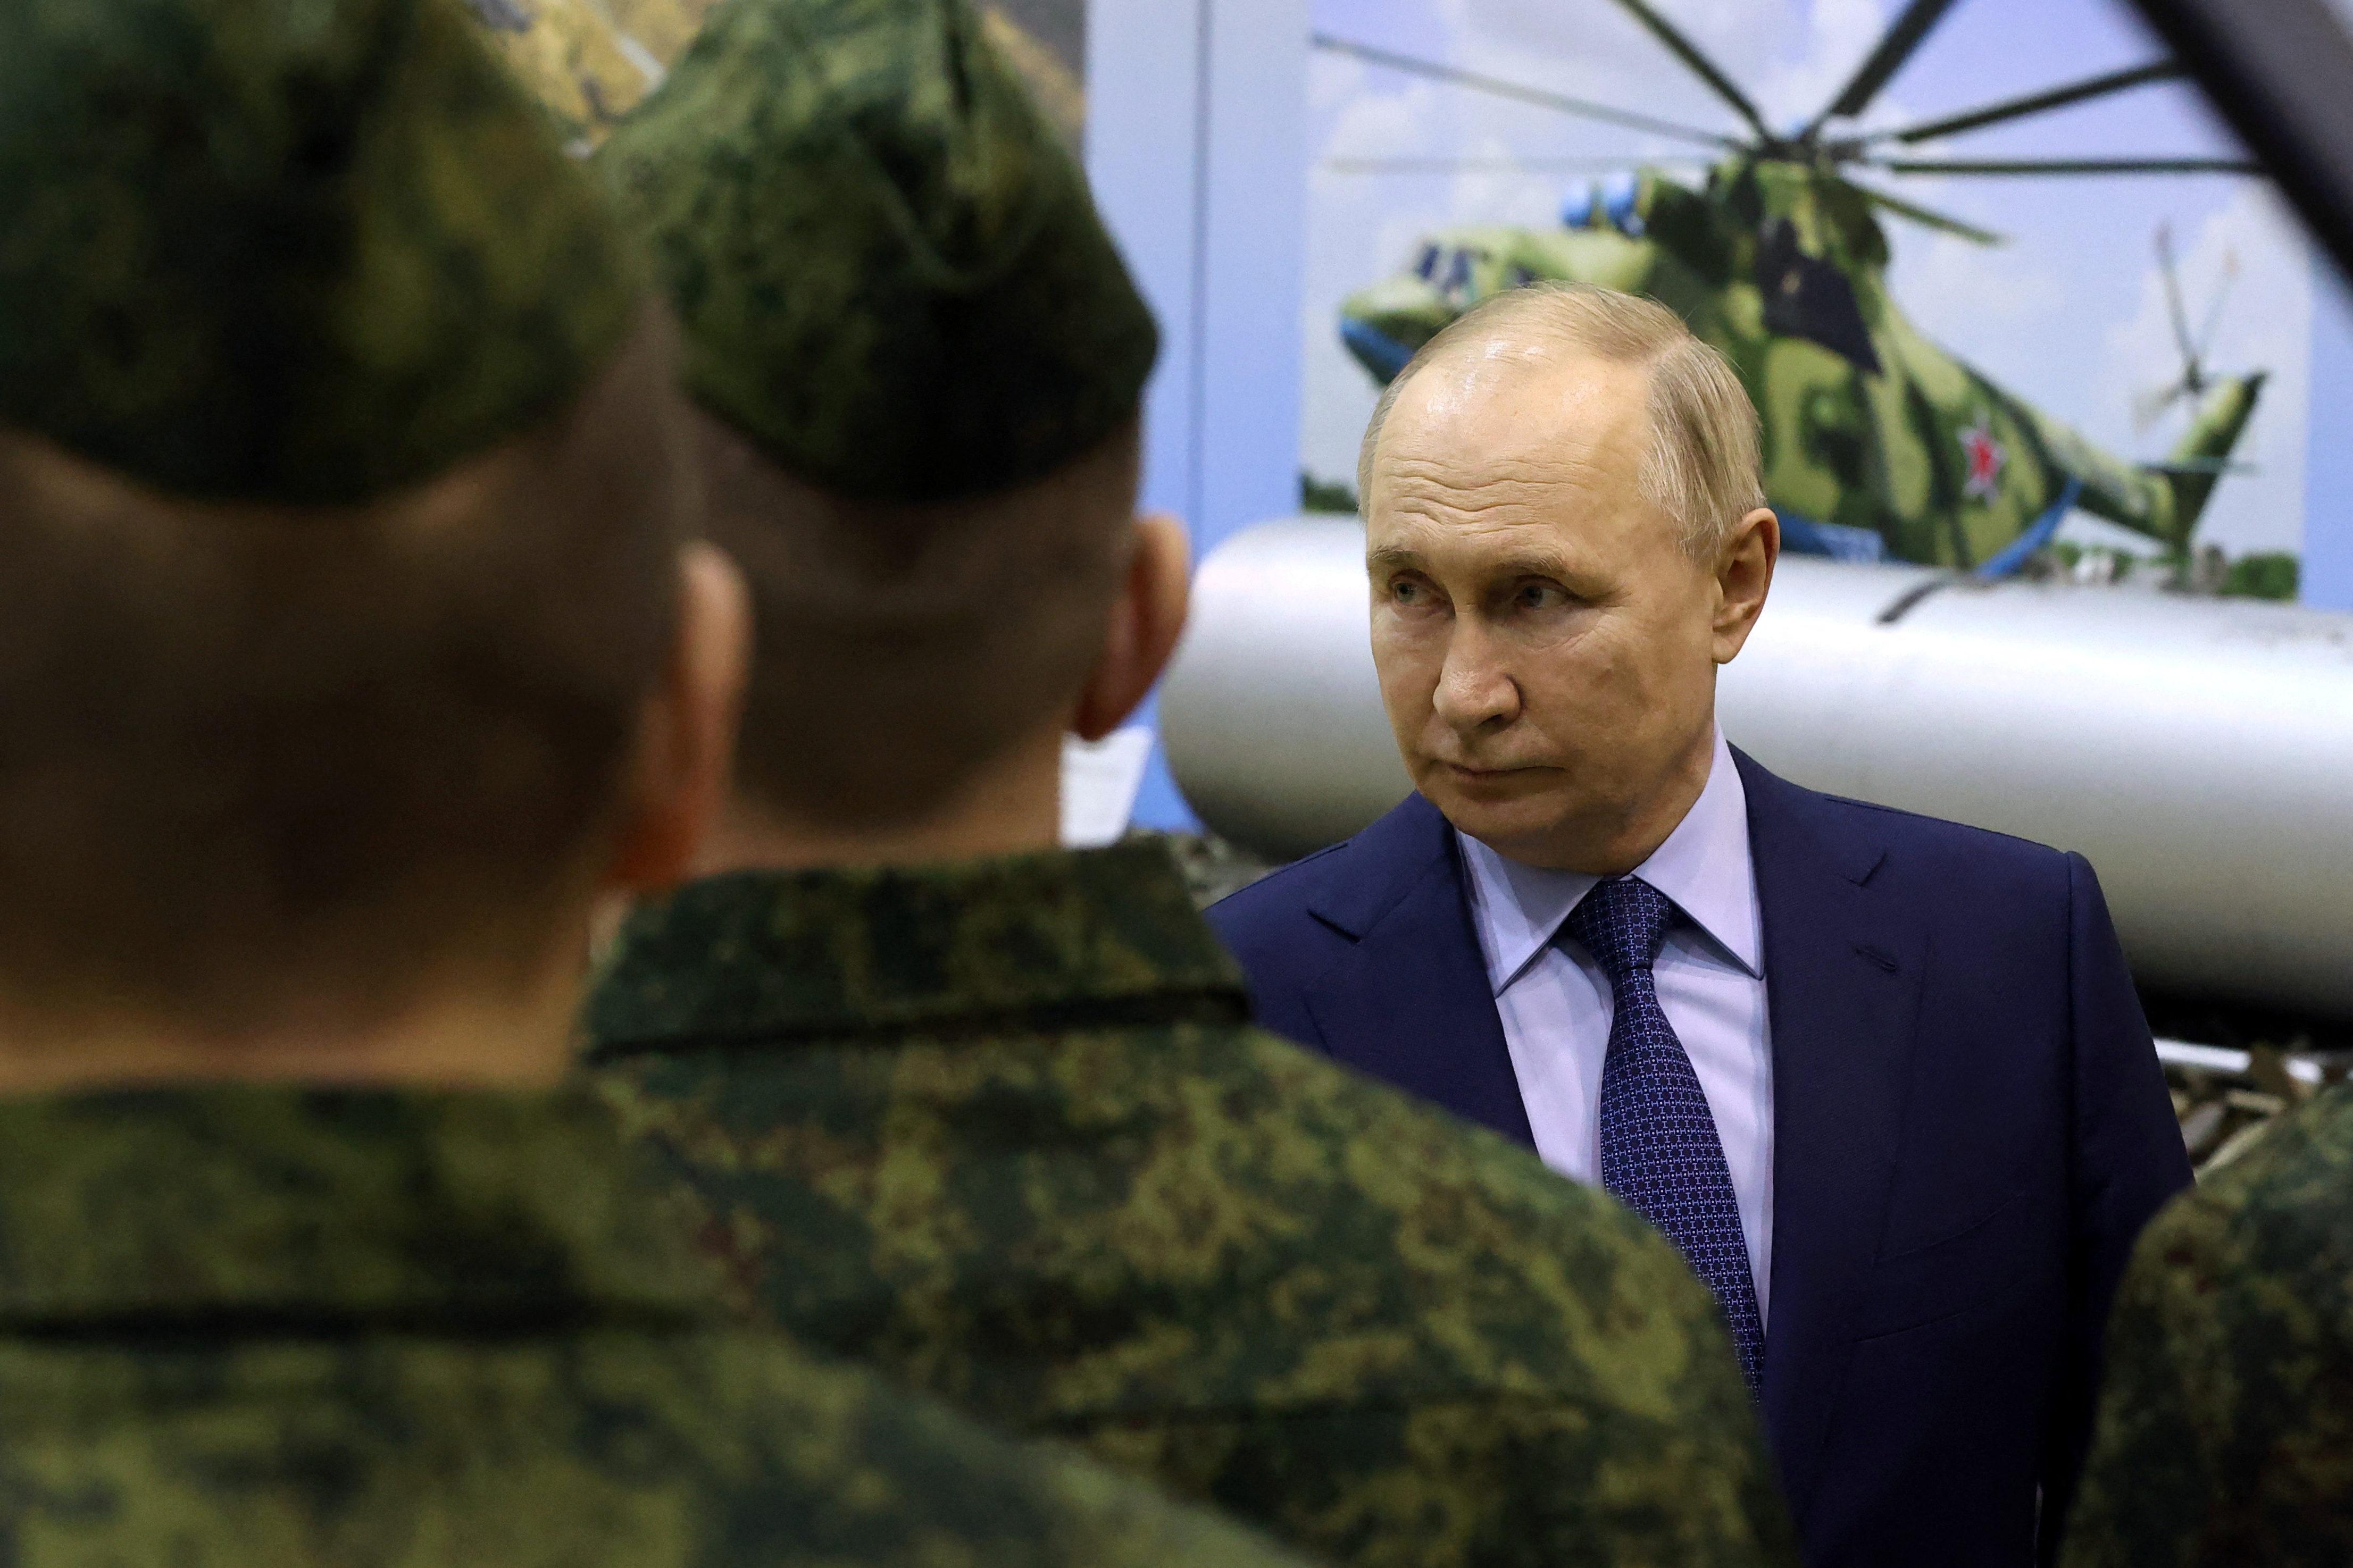 Russian President Vladimir Putin meets with military pilots in Torzhok